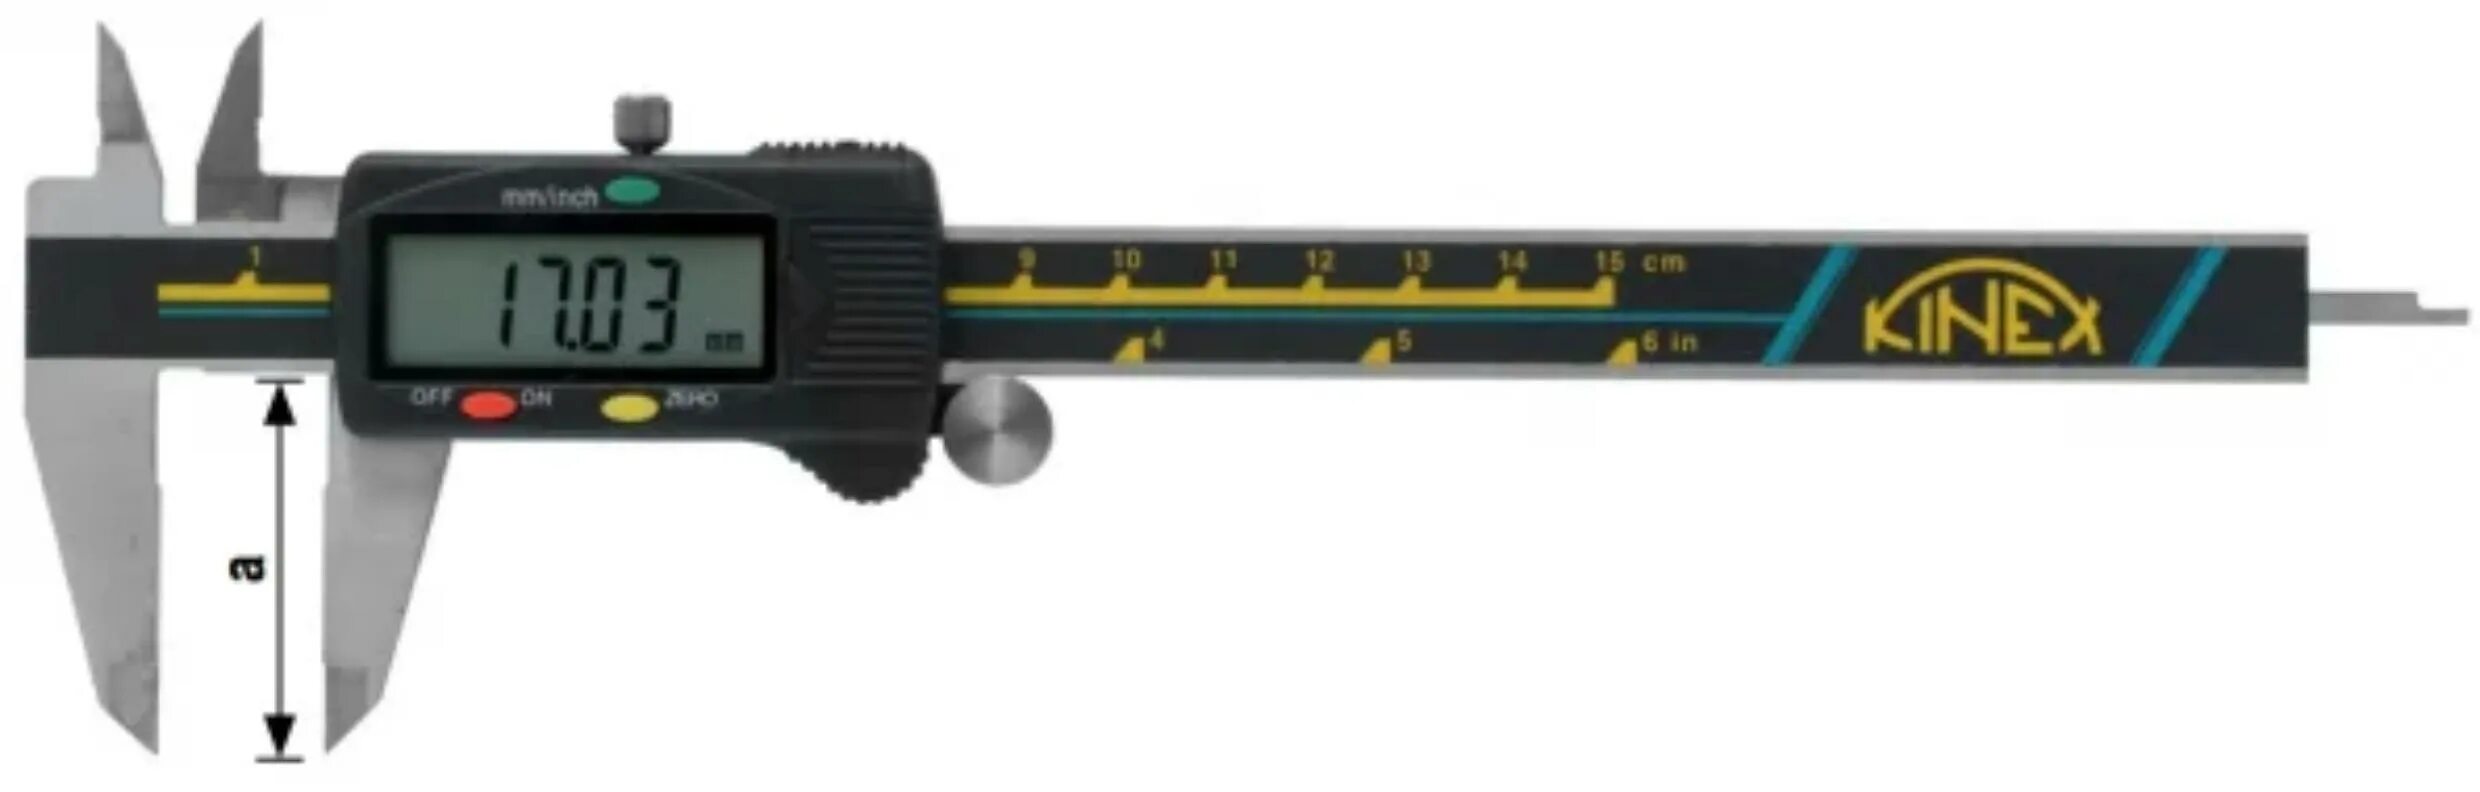 Штангенциркуль Stayer 150 мм 0.1 мм 0-150 мм. Kinex штангенциркуль 200 мм. Глубиномер цифровой 0-50мм. Штангенциркуль с глубиномером 300 мм.